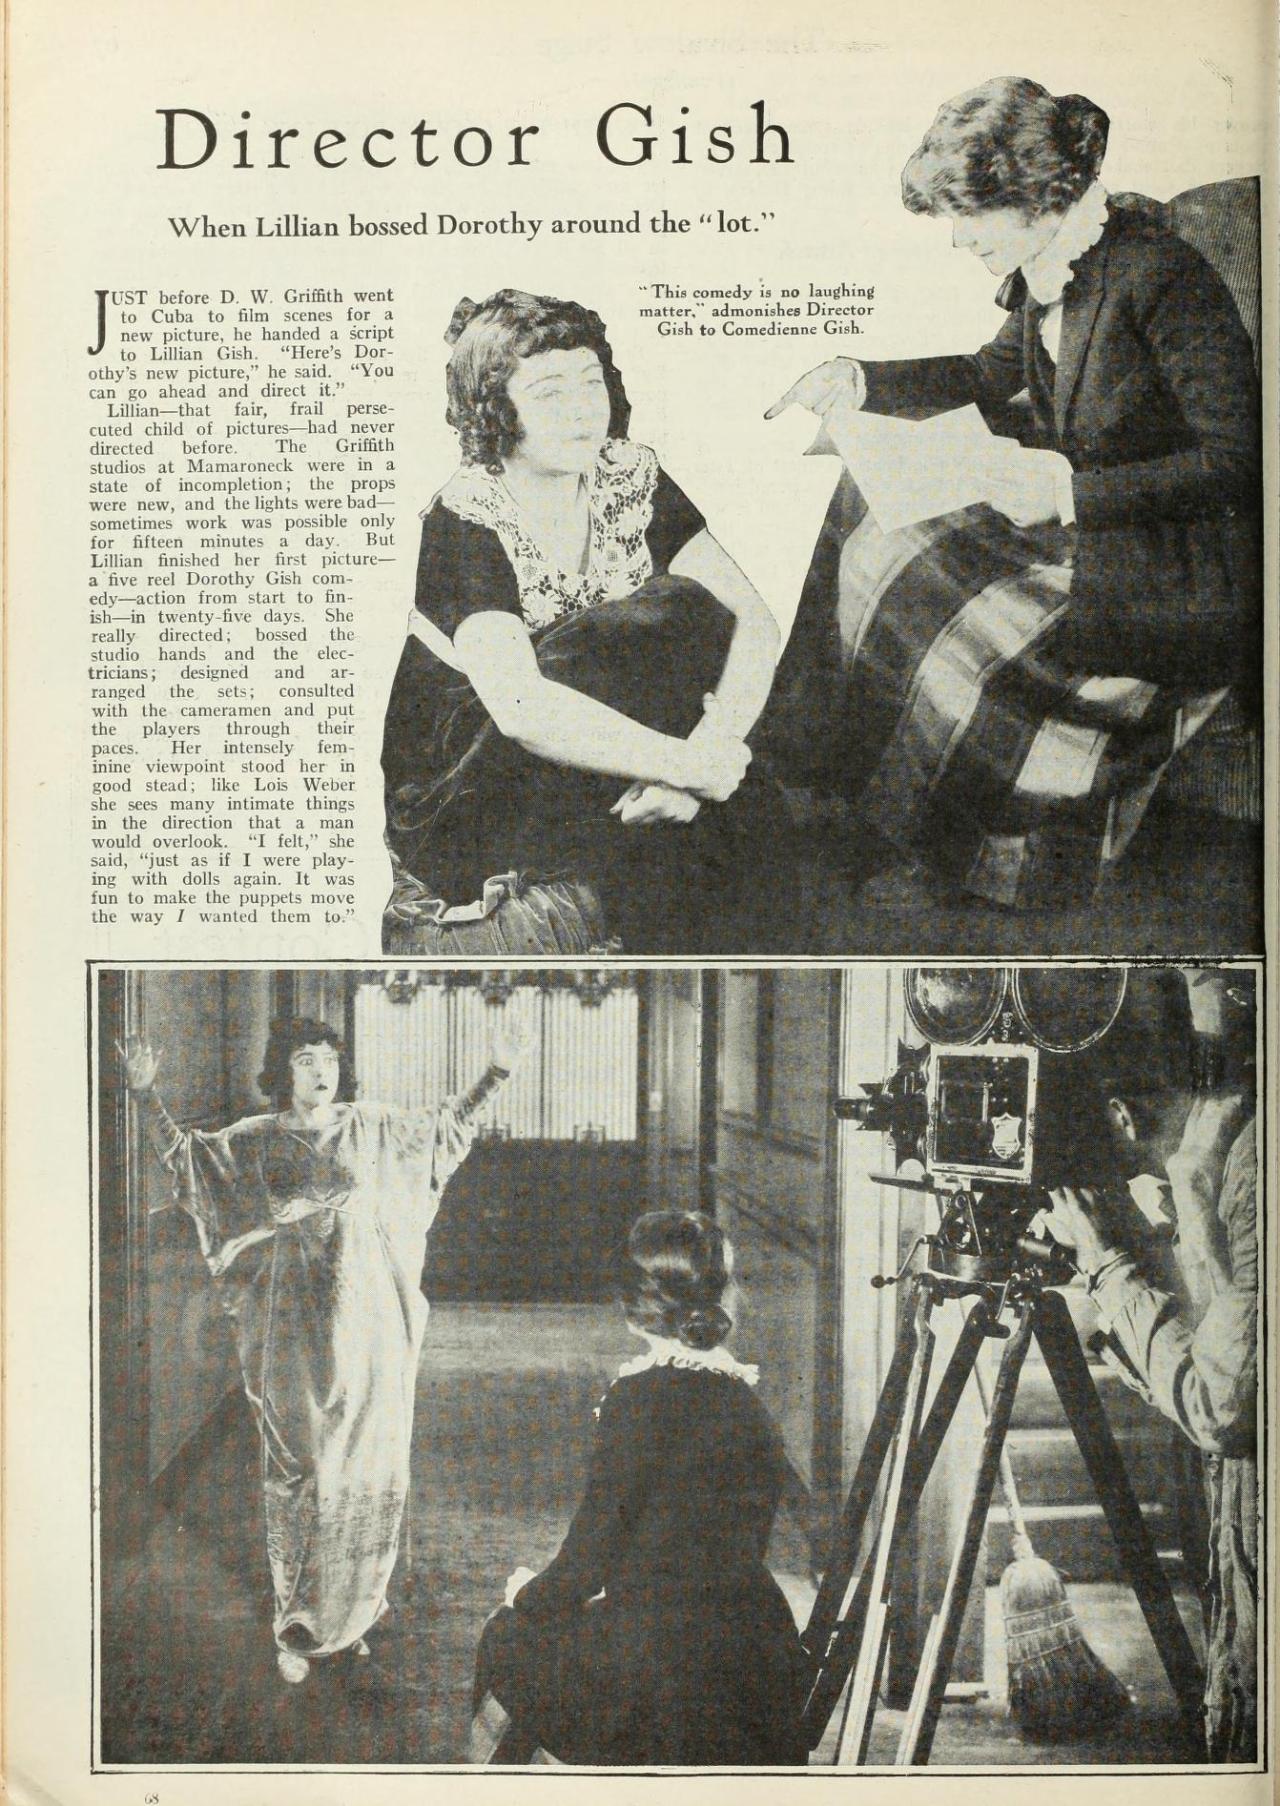 #female movie director  #lillian gish director  #1920s women film directors #dorothy gish #photoplay magazine article  #Silent film actress  #silent film director #lillian gish